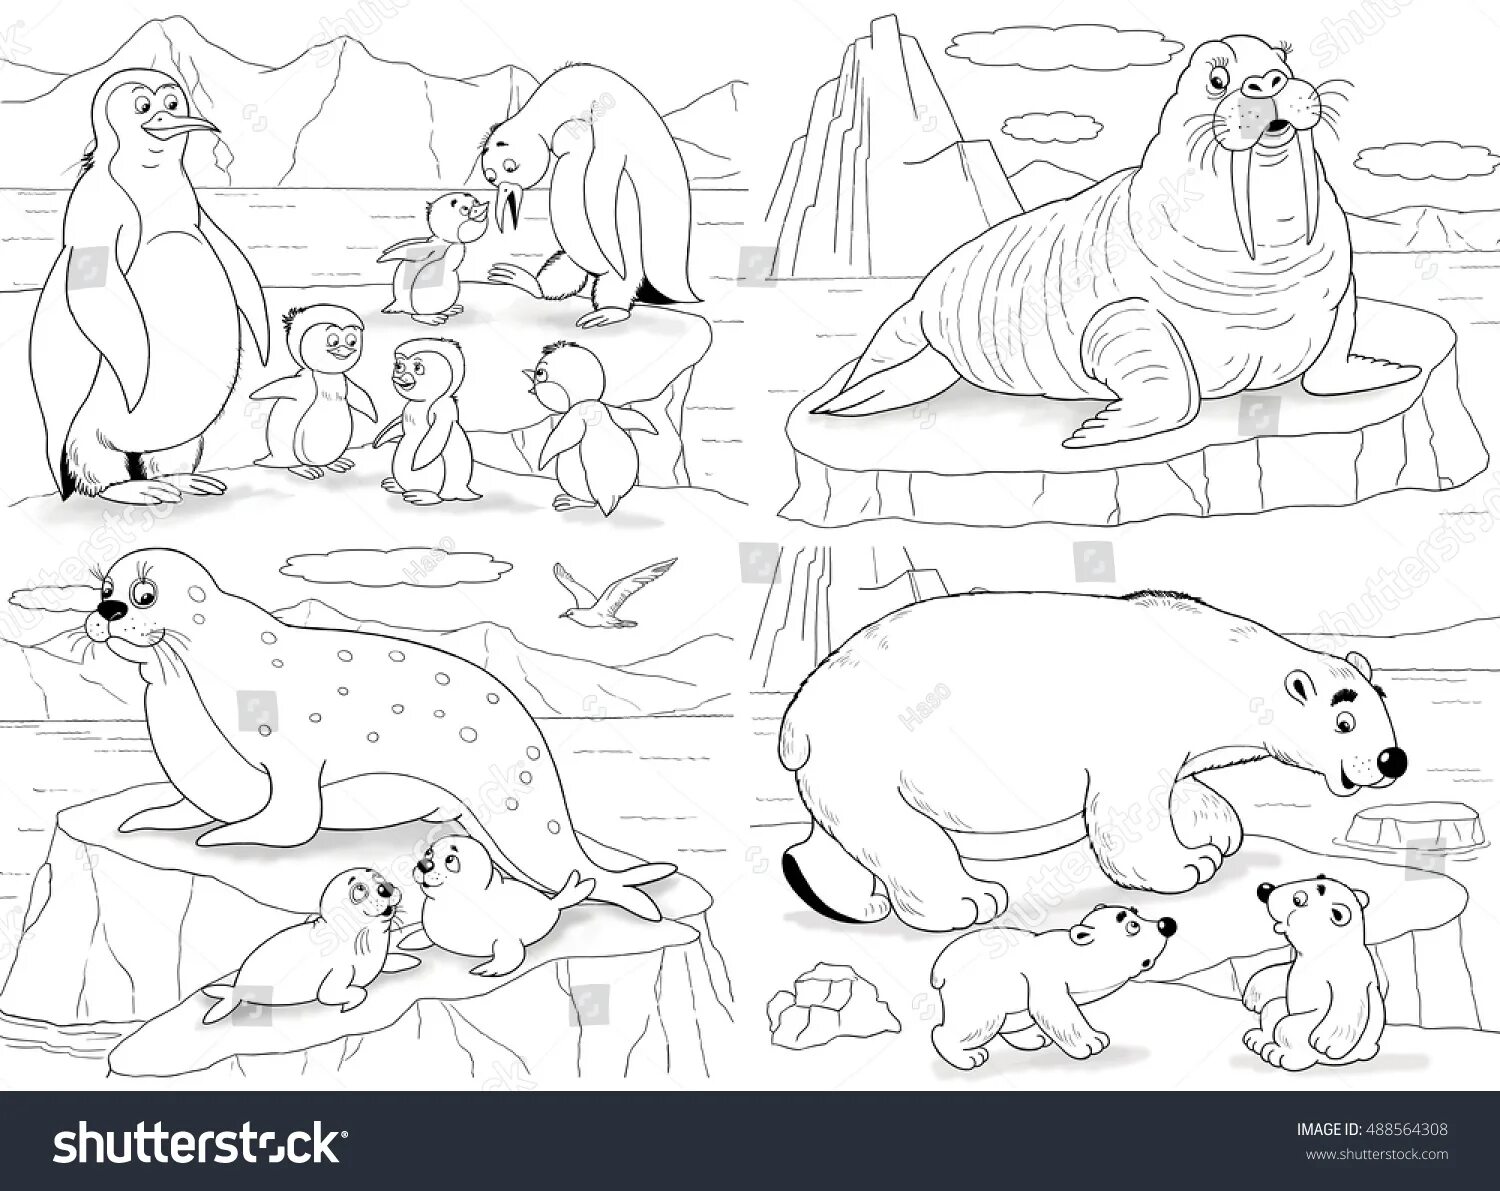 Antarctic animals for kids #9